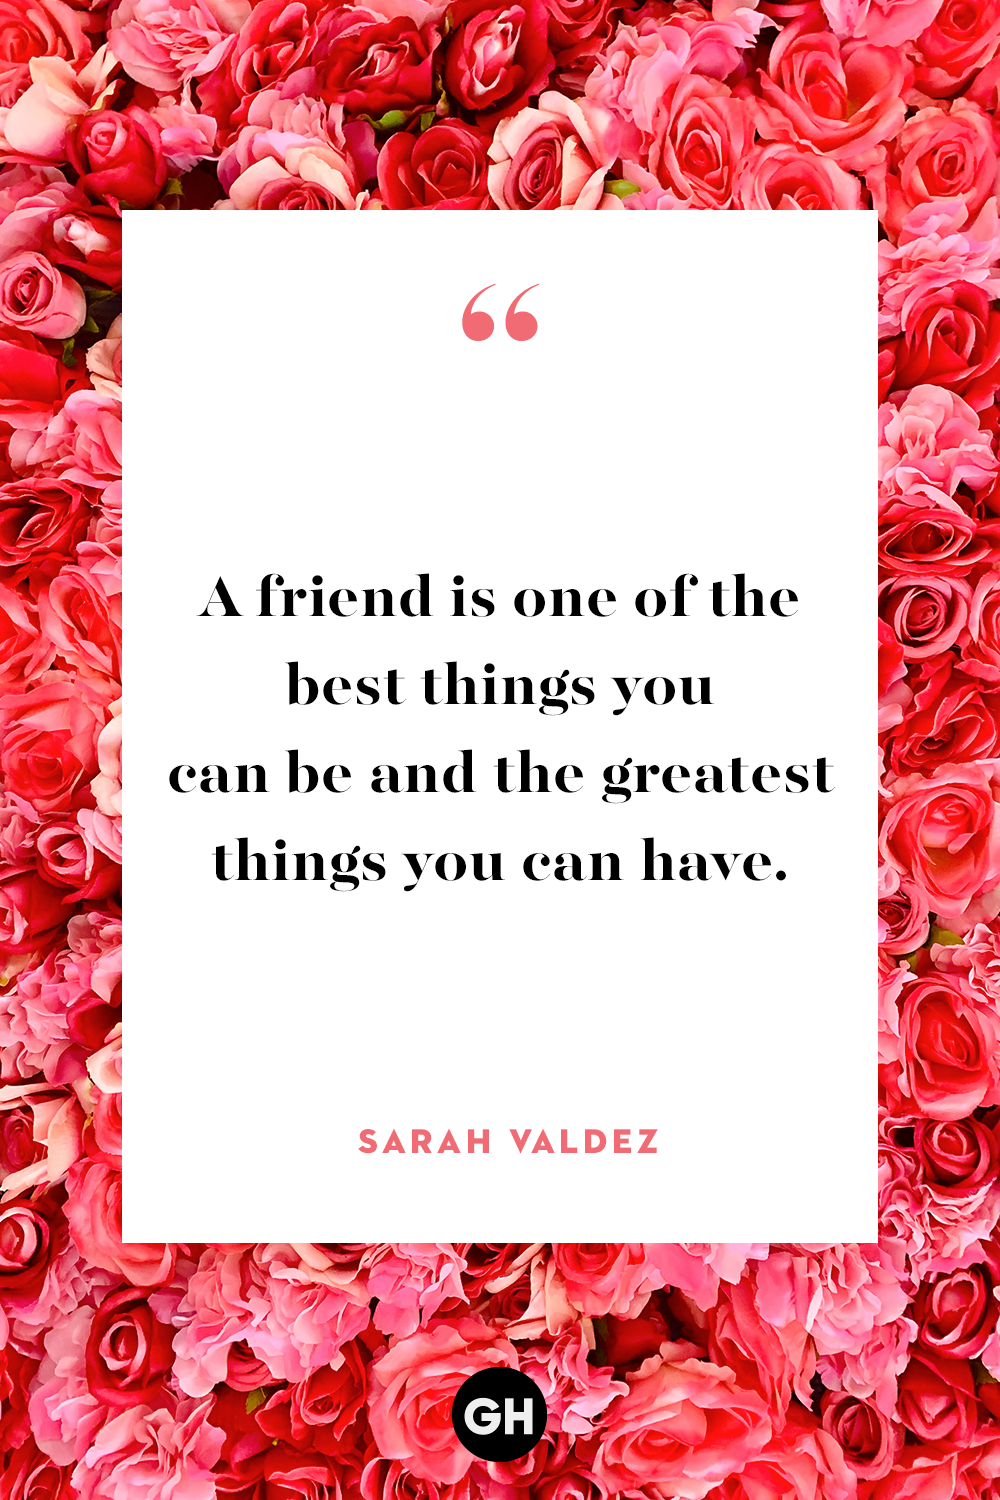 104 Best Valentine's Day Quotes for Friends - Valentine's ...